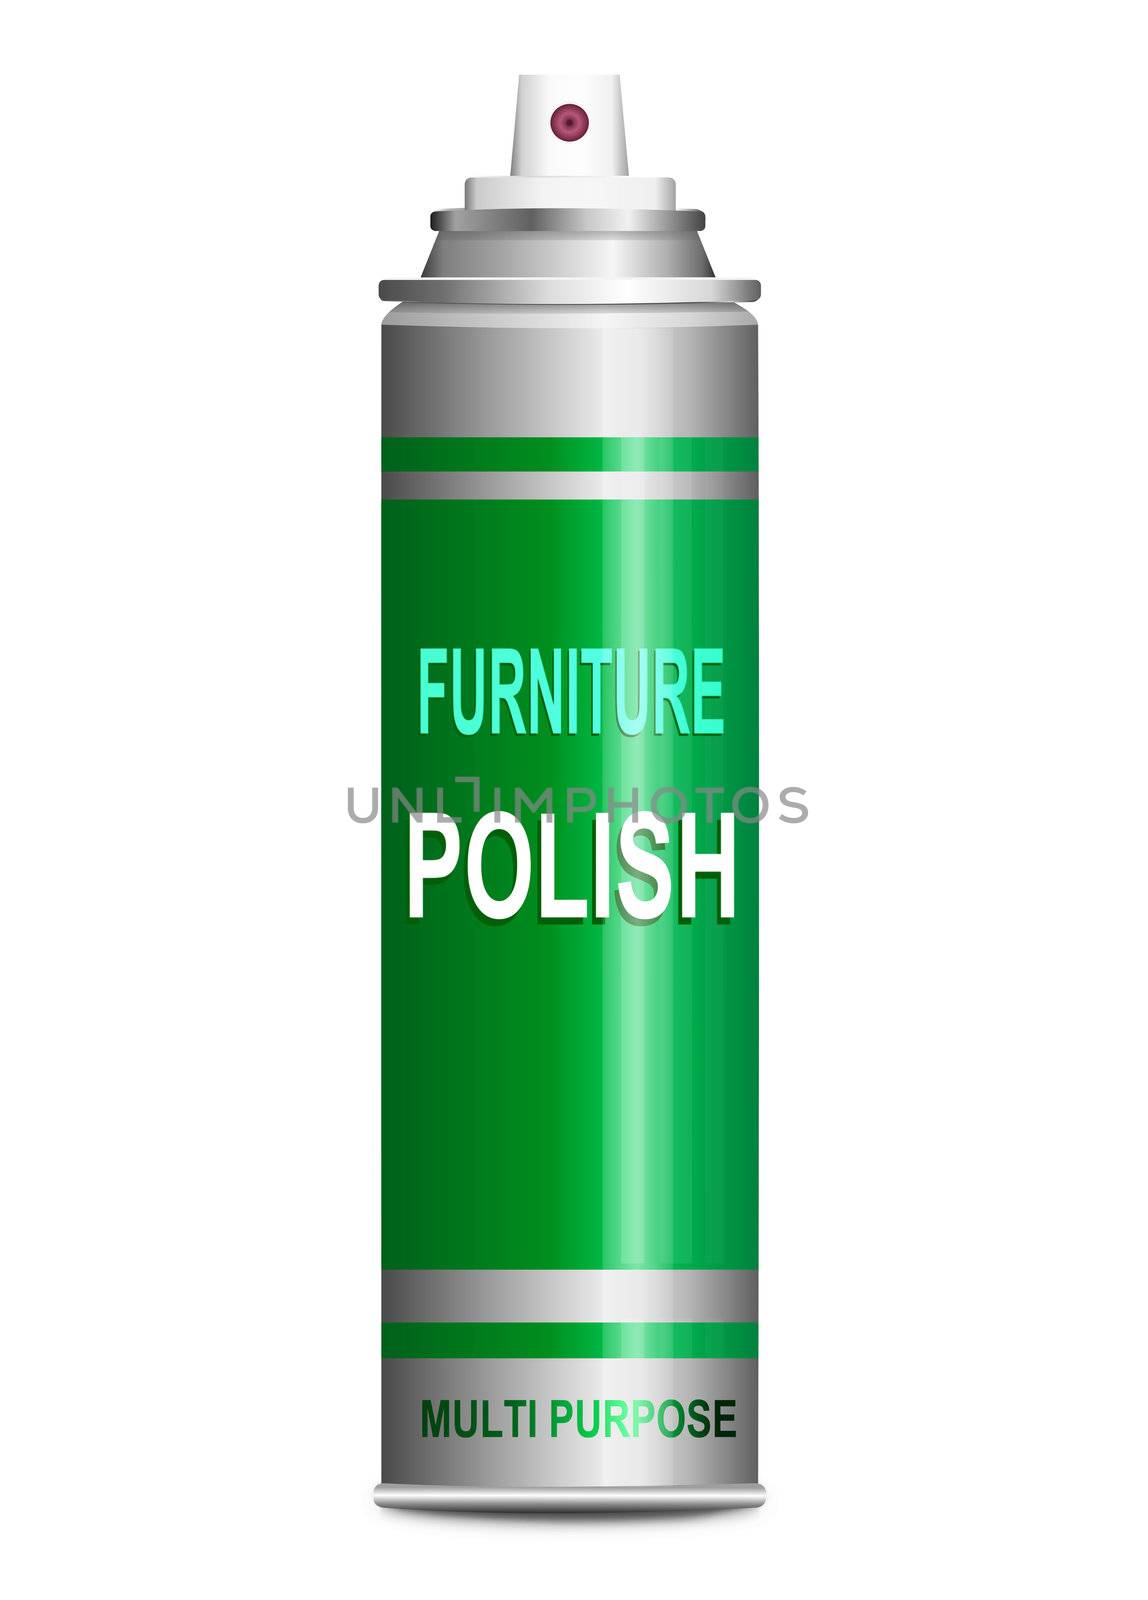 Illustration depicting a single furniture polish aerosol spray arranged over white.